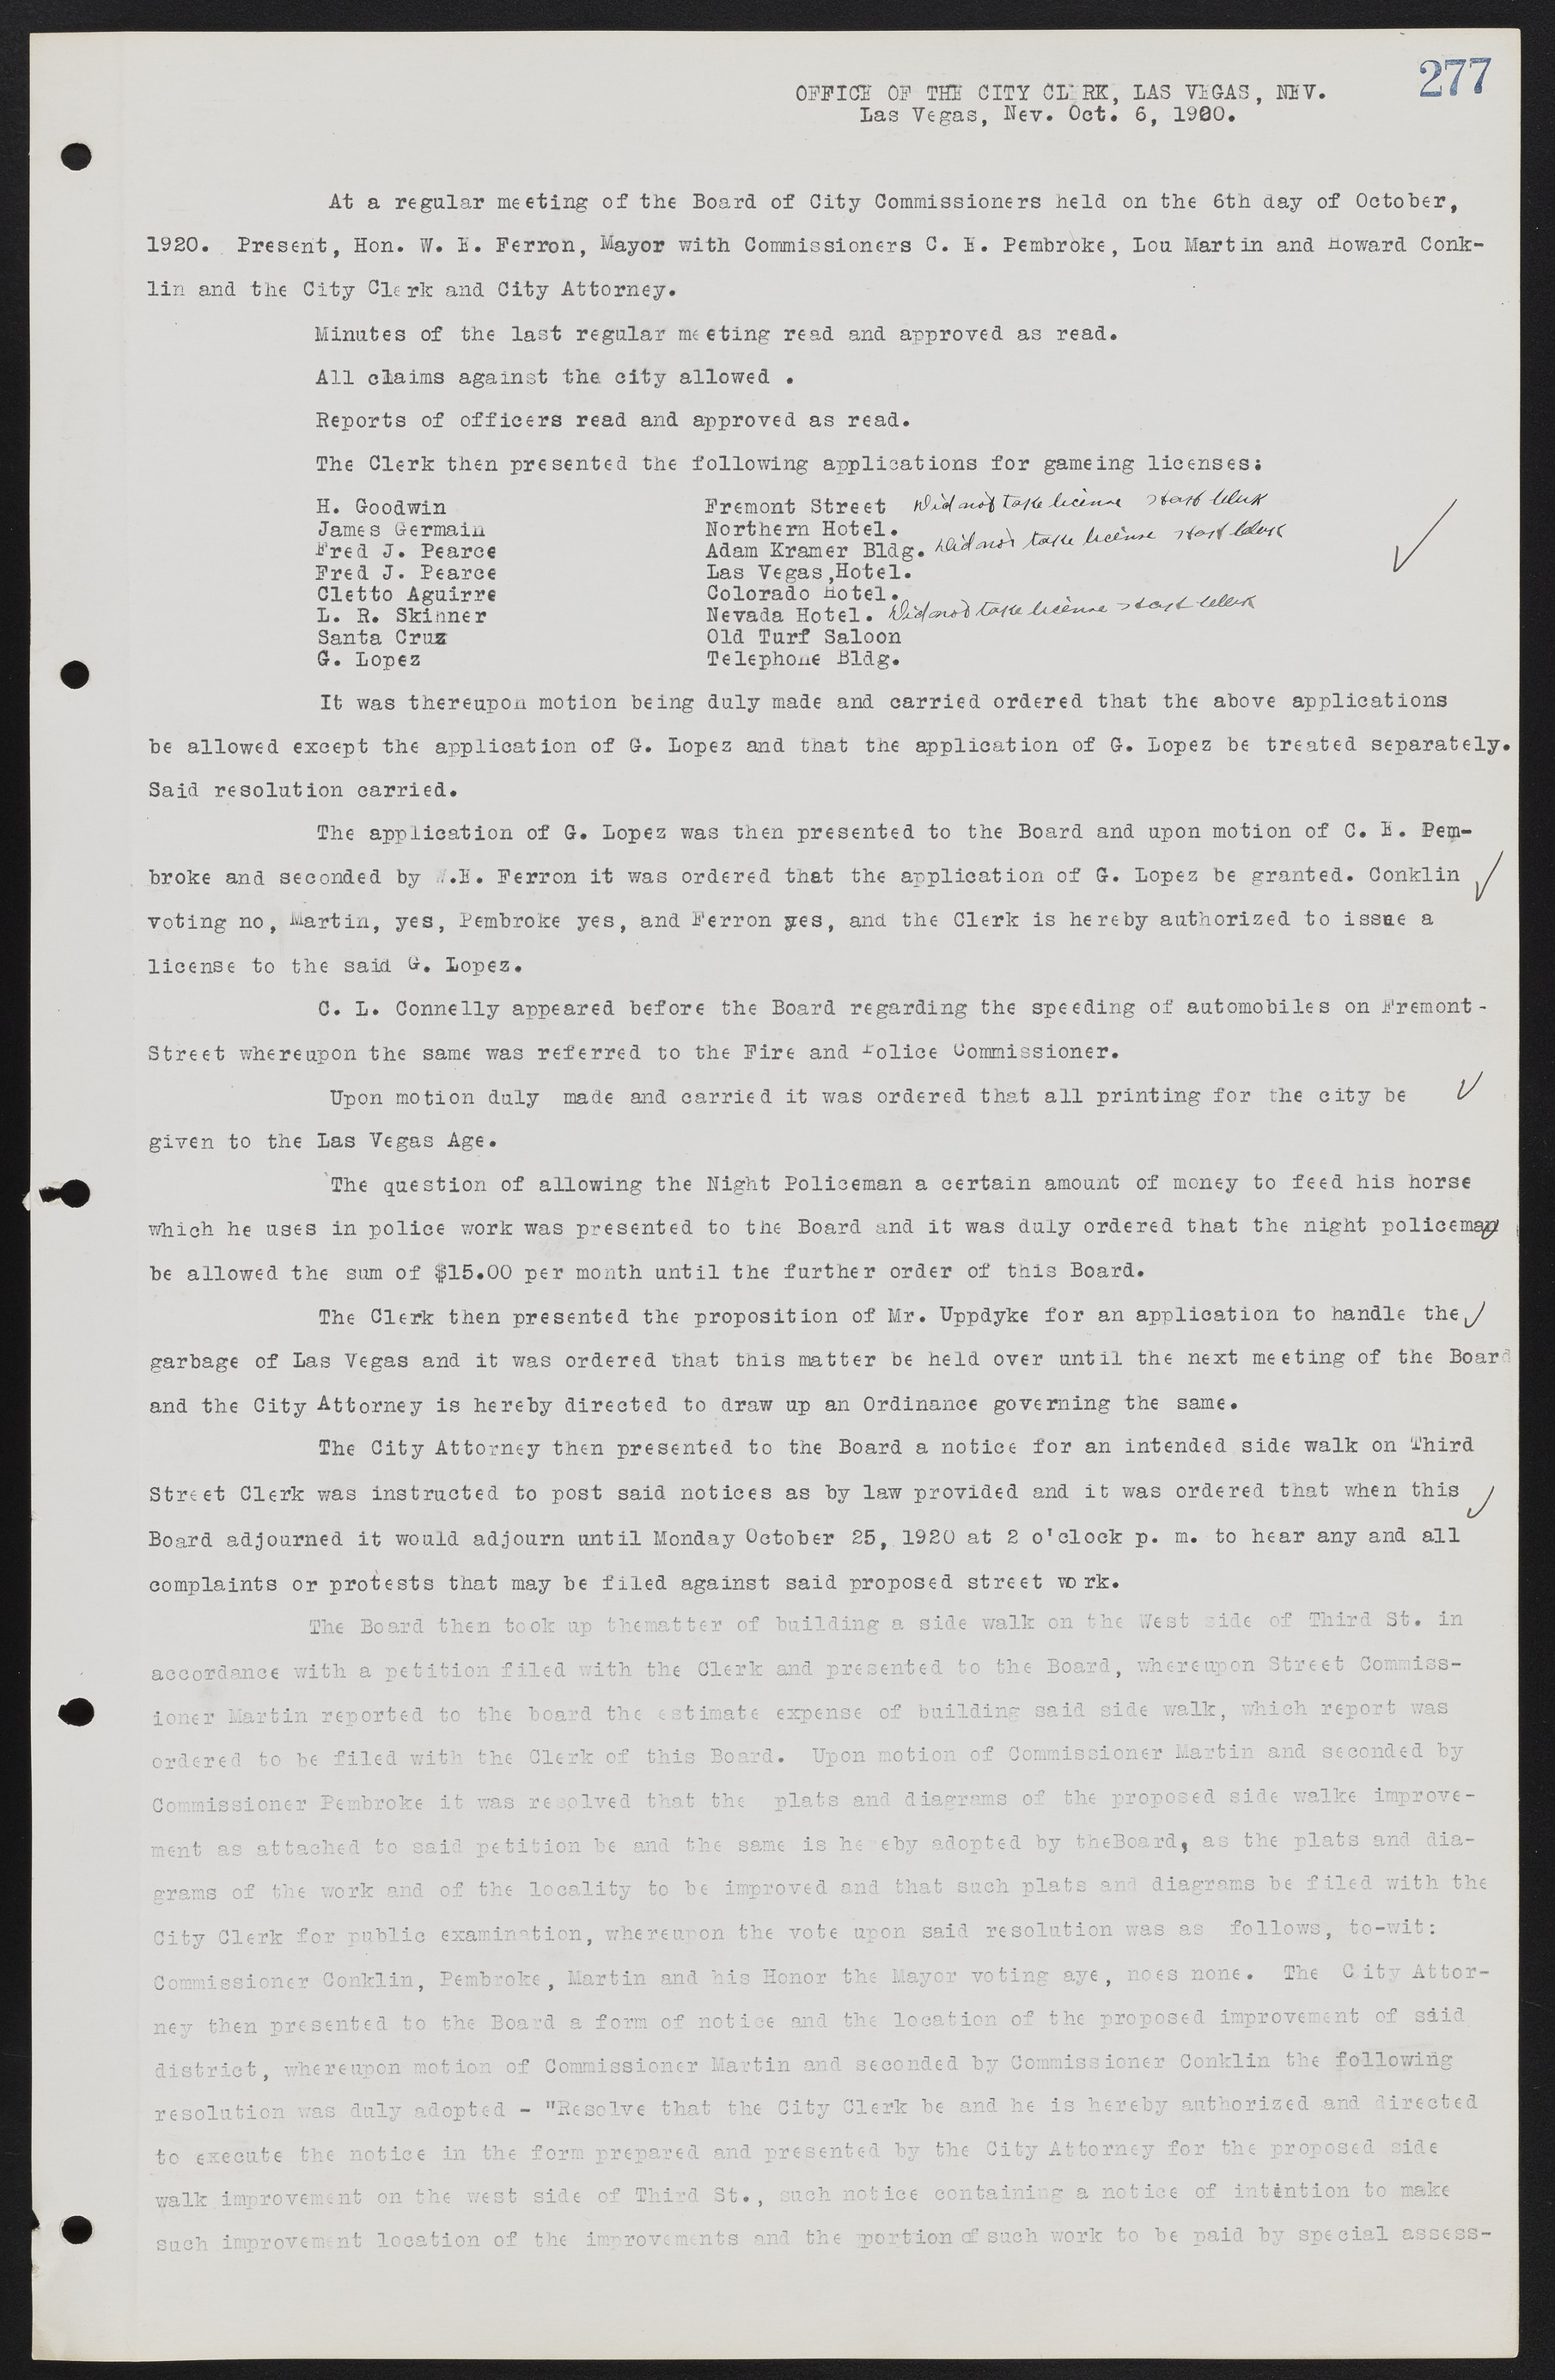 Las Vegas City Commission Minutes, June 22, 1911 to February 7, 1922, lvc000001-293